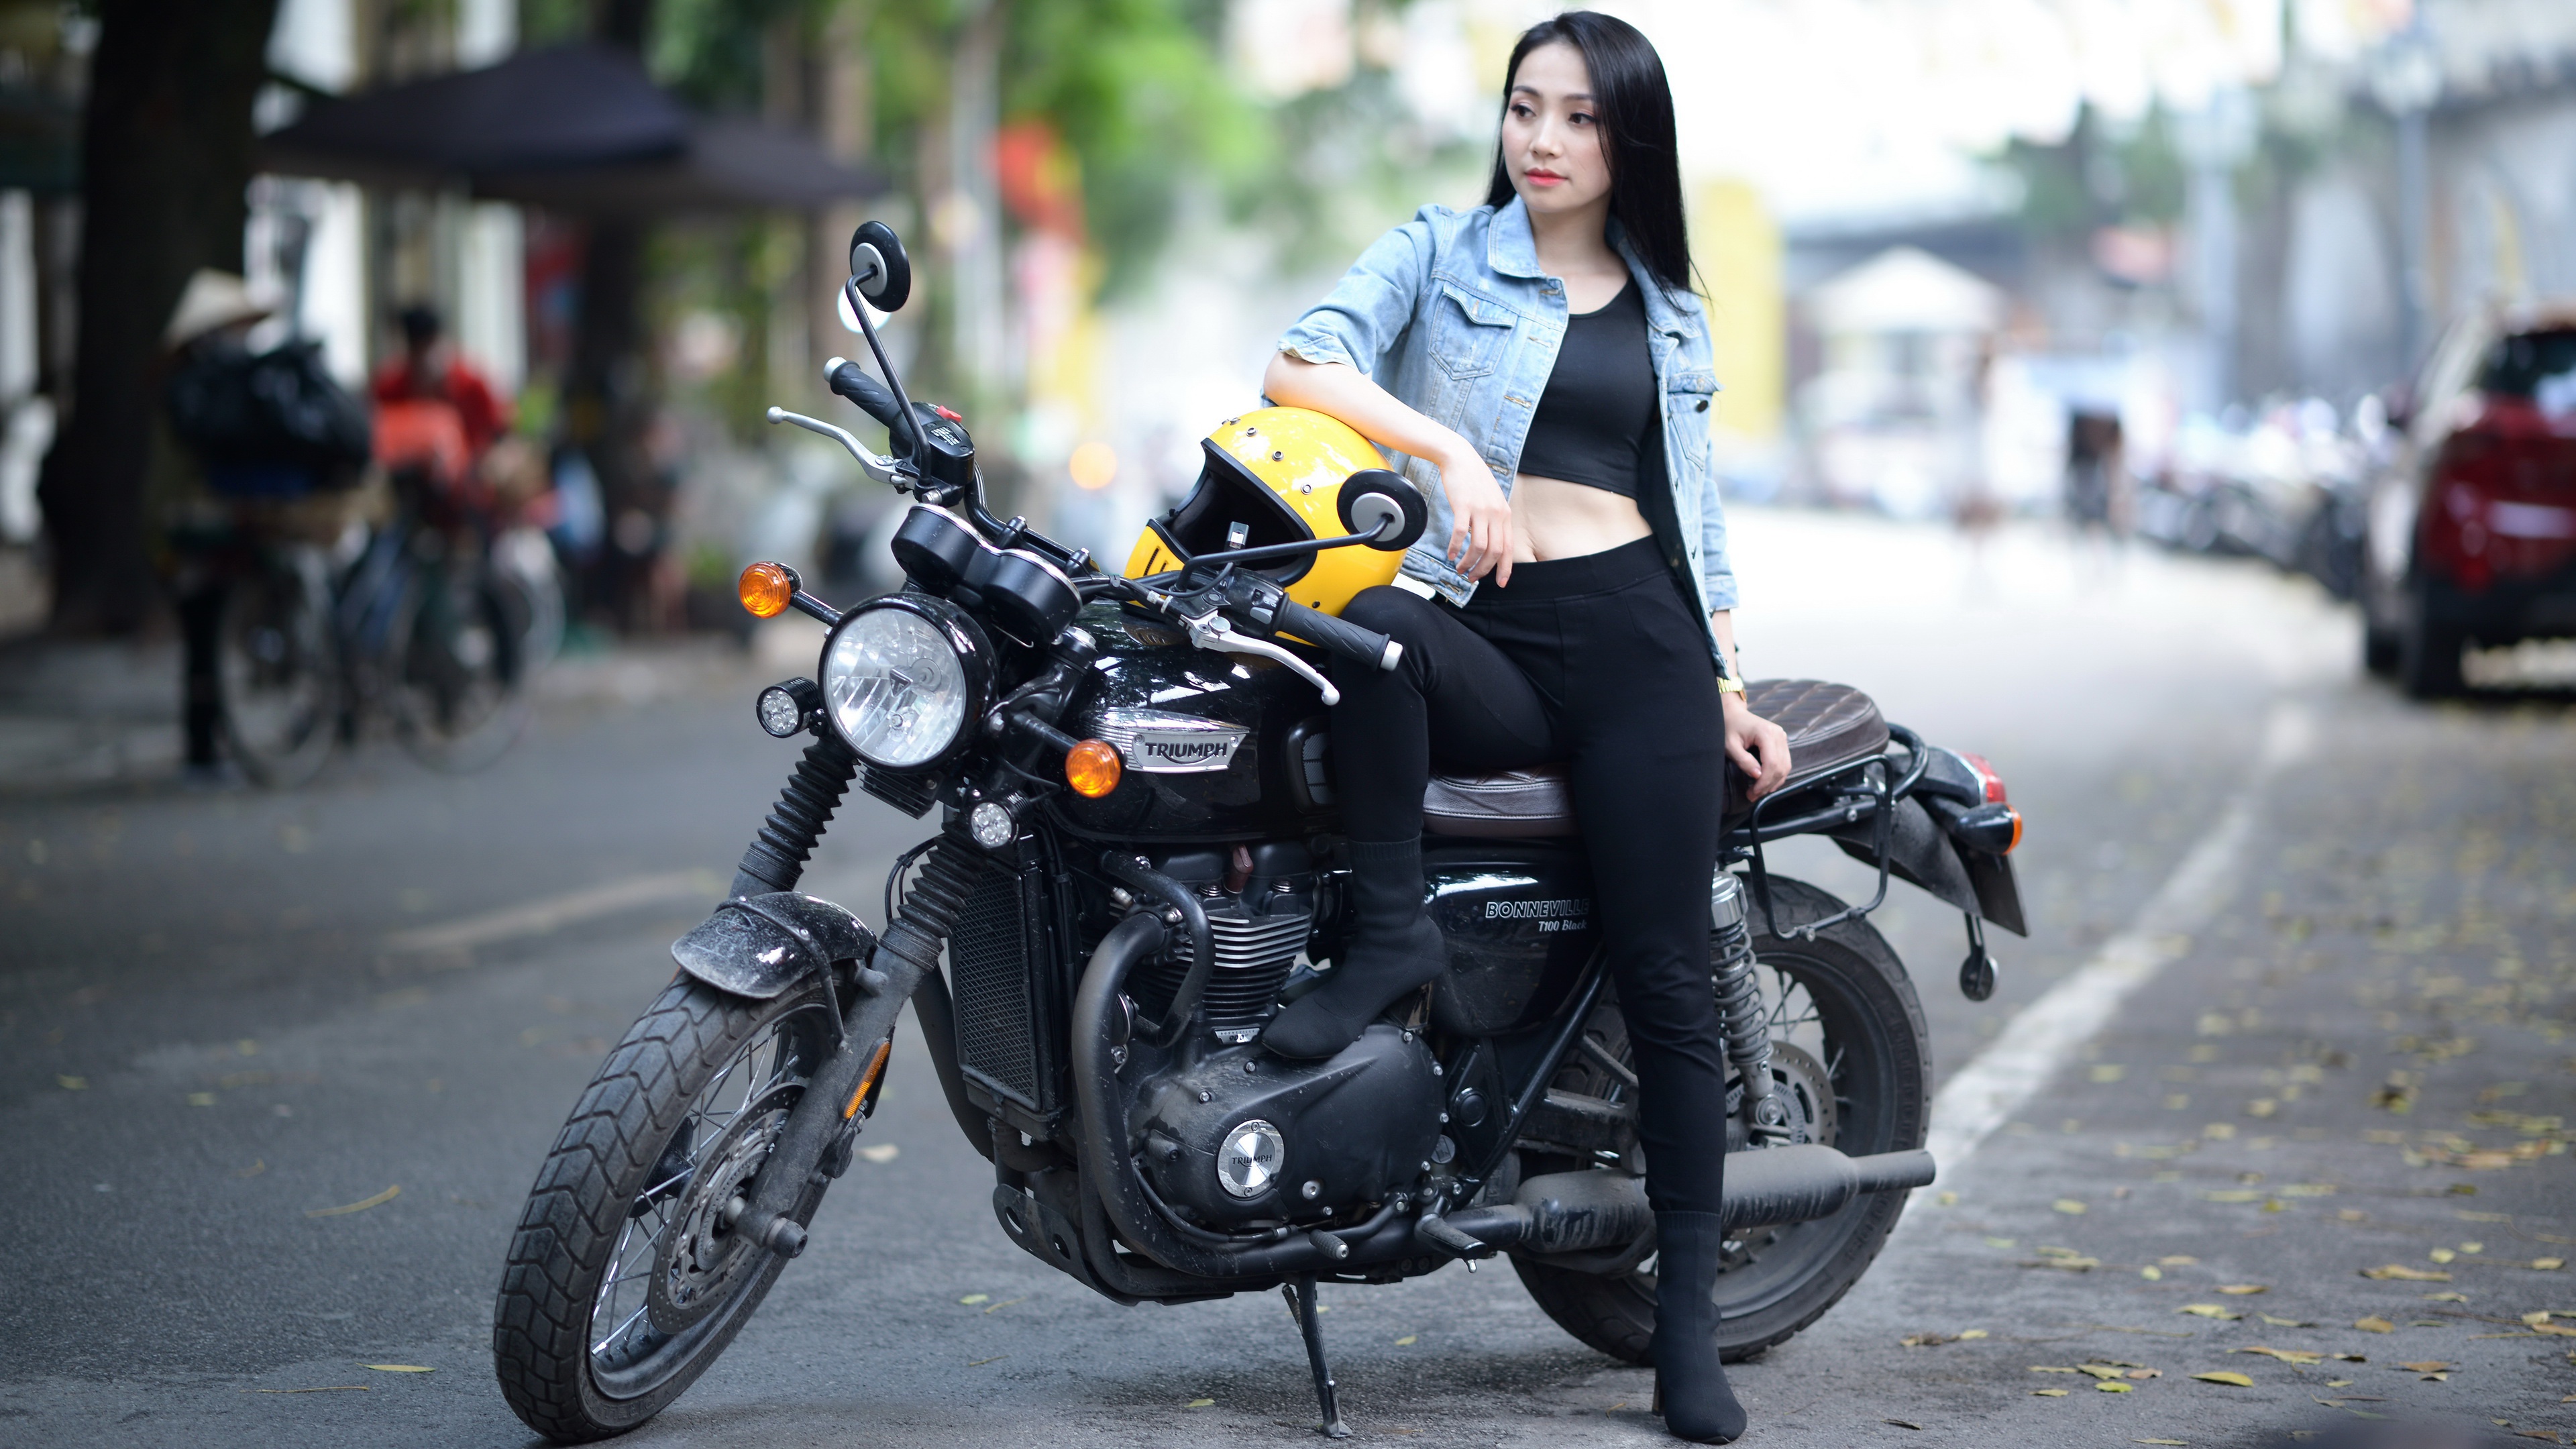 Descarga gratuita de fondo de pantalla para móvil de Motocicleta, Modelo, Mujeres, Pelo Negro, Asiática, Chicas Y Motocicletas, Profundidad De Campo.